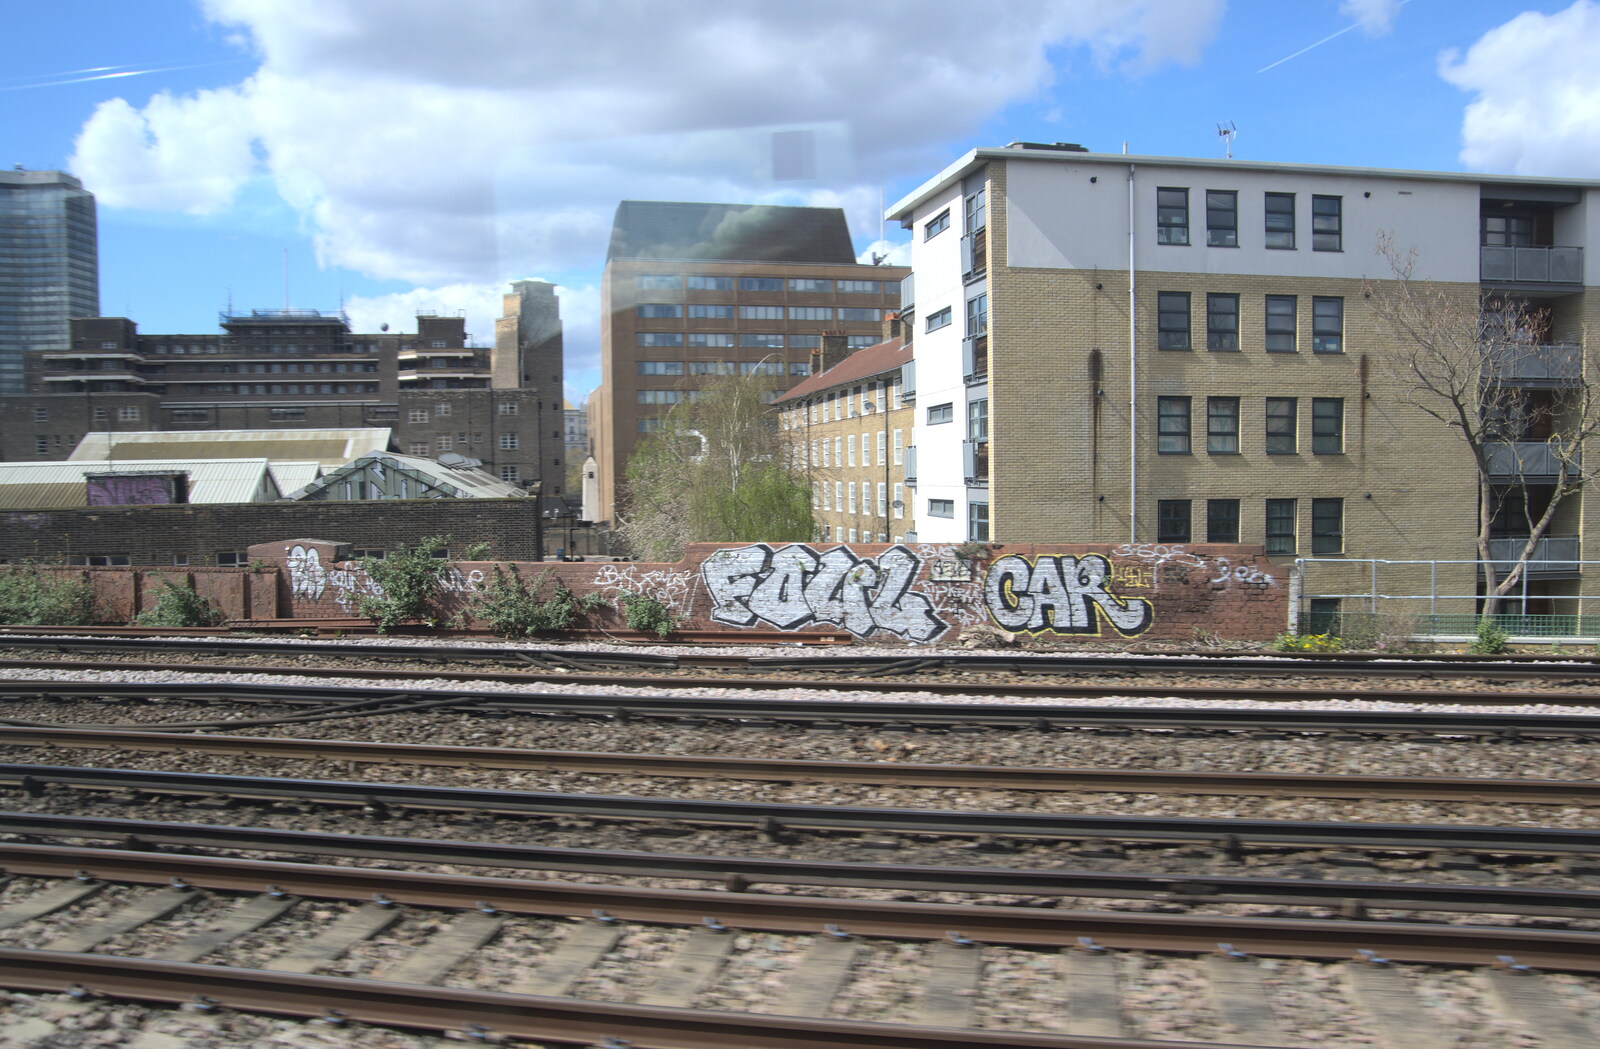 A Trip Down South, New Milton, Hampshire - 9th April 2022: Graffiti on the trackside near Waterloo